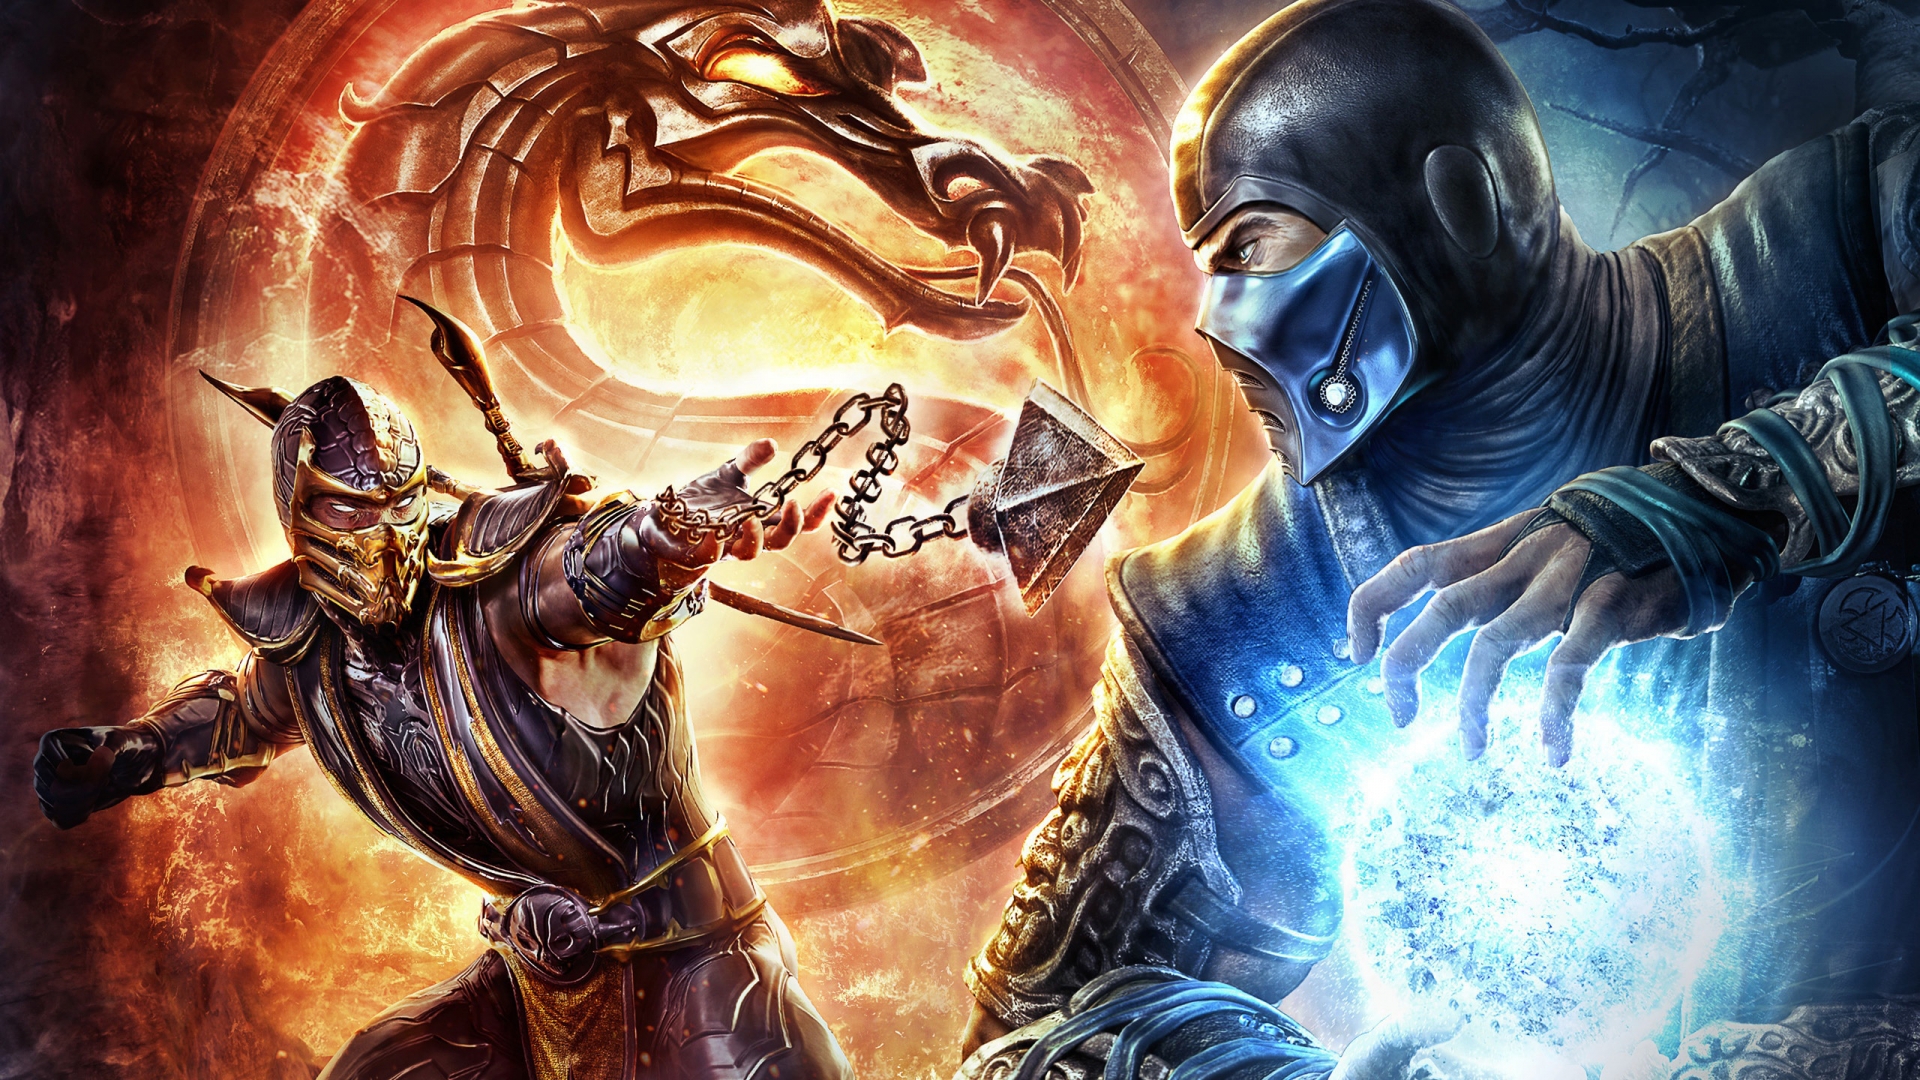 Scorpions vs Sub Zero Mortal Kombat for 1920 x 1080 HDTV 1080p resolution